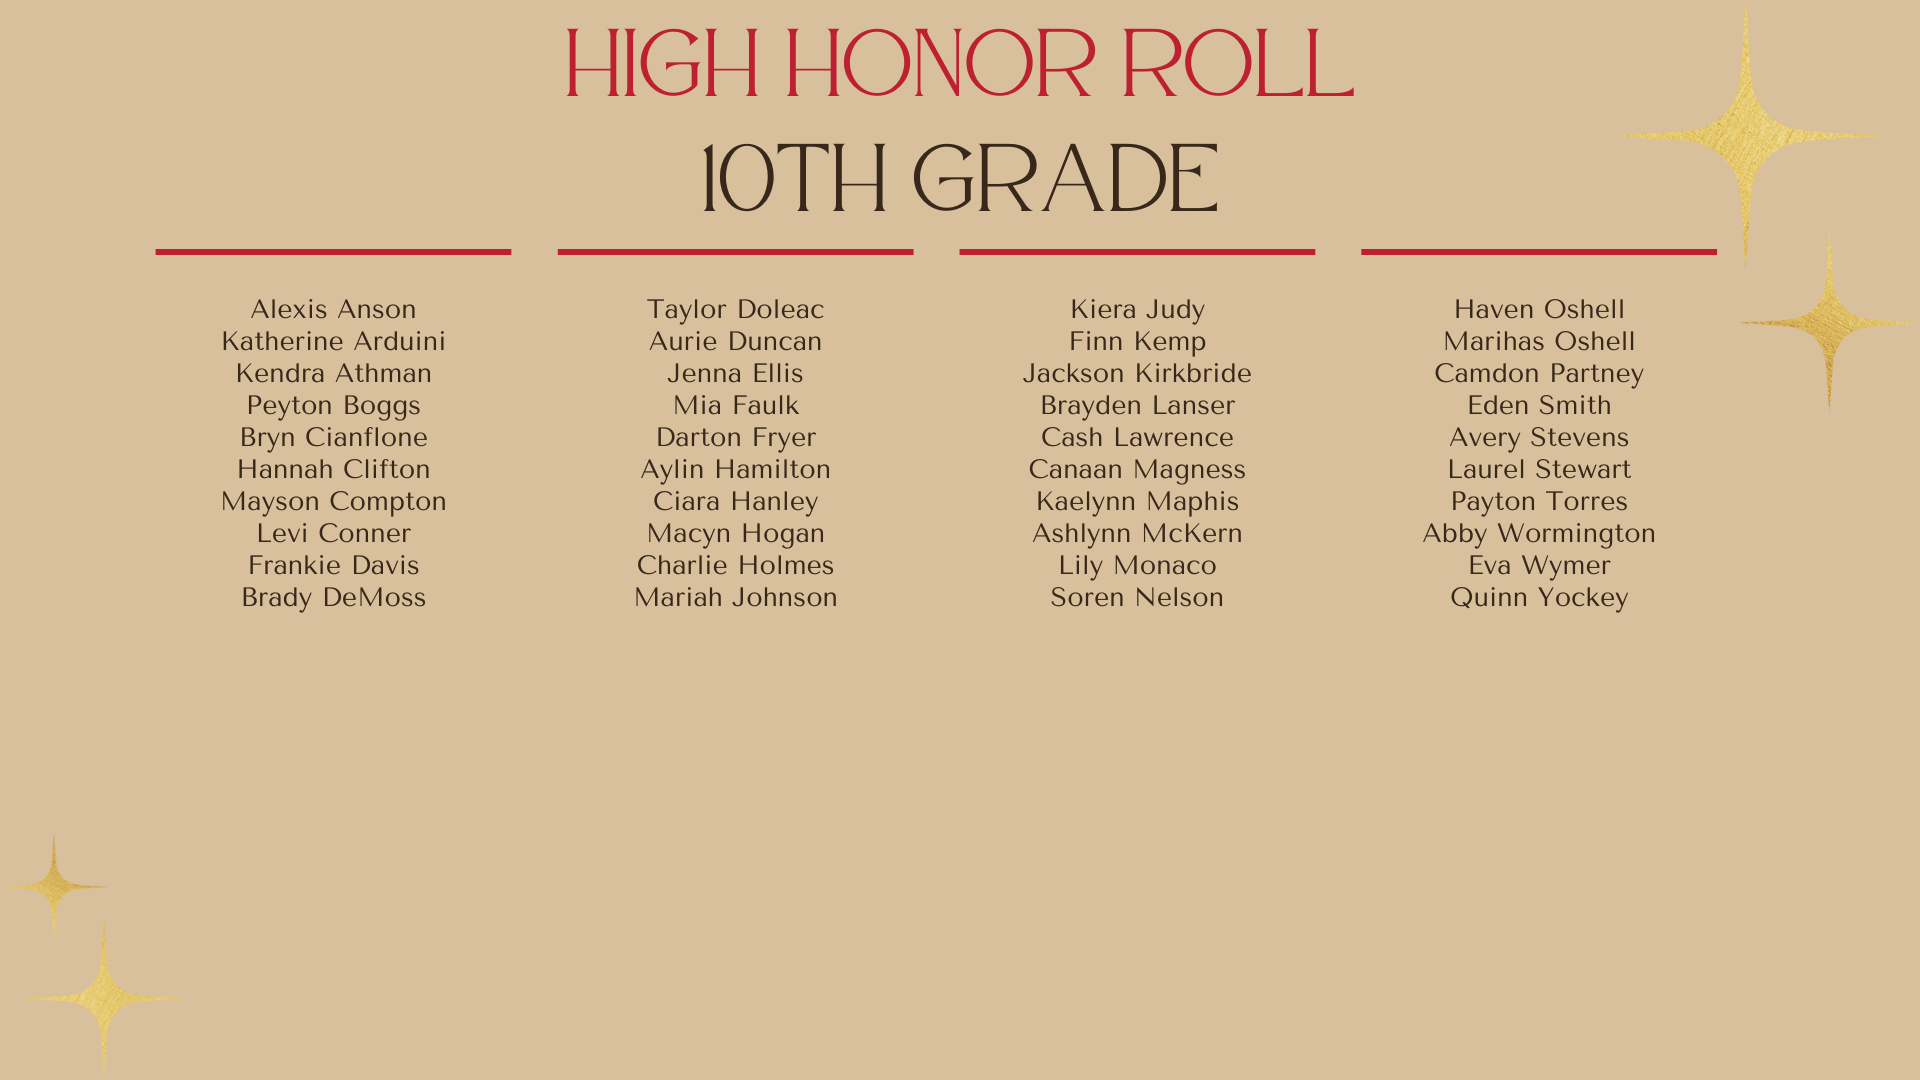 High Honor Roll 10th grade